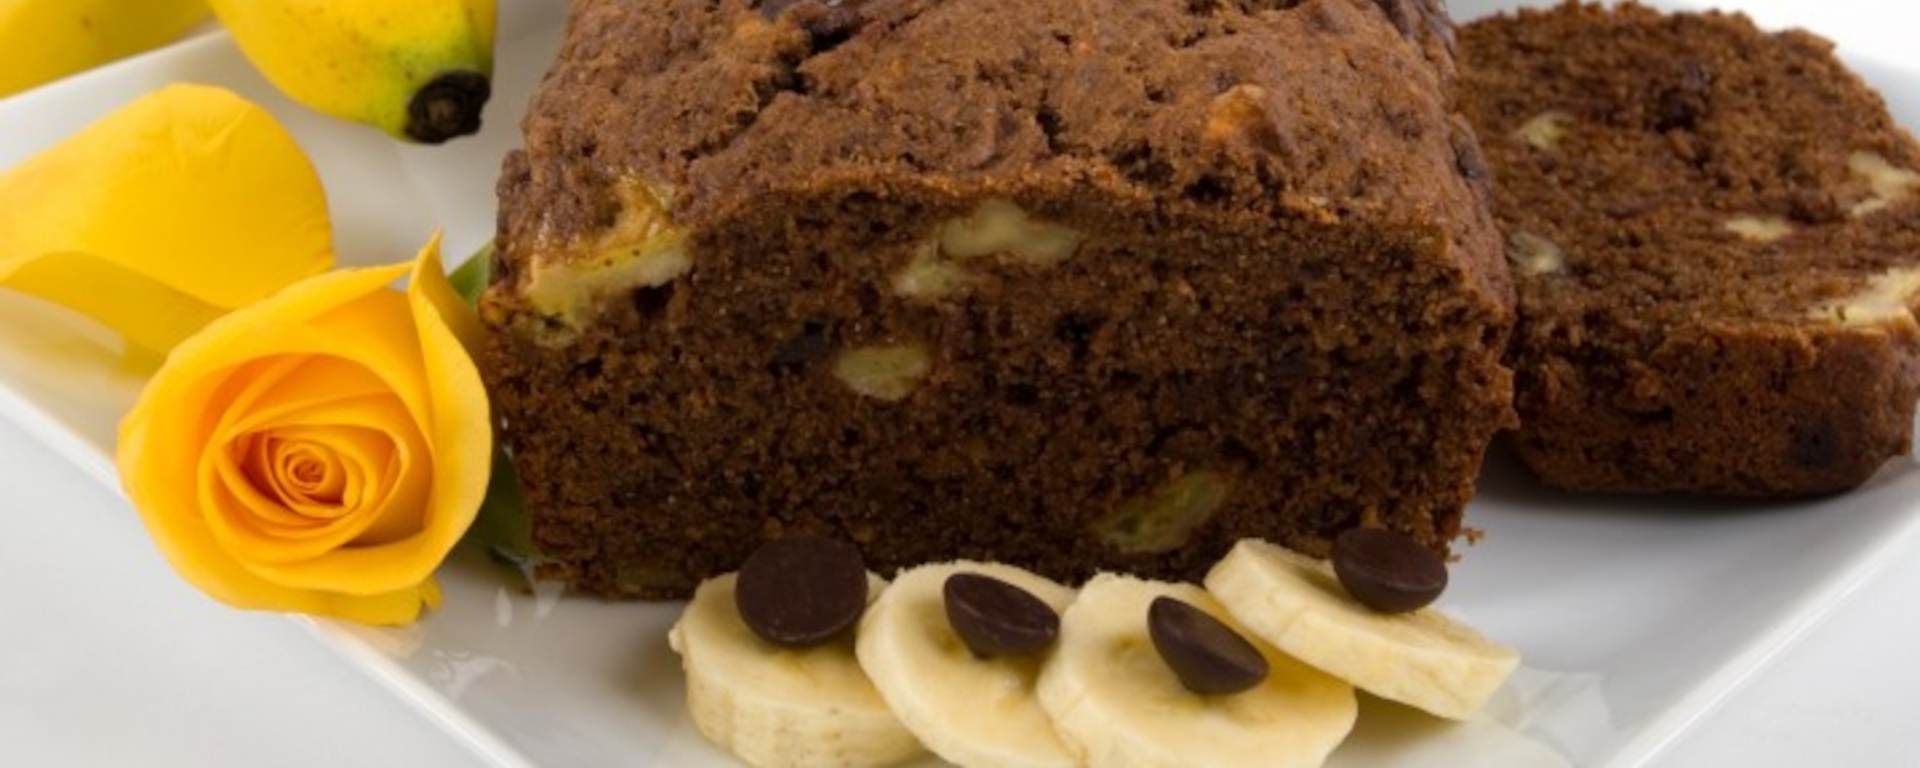 LuvMyRecipe.com - Chocolate Banana Cake Featured